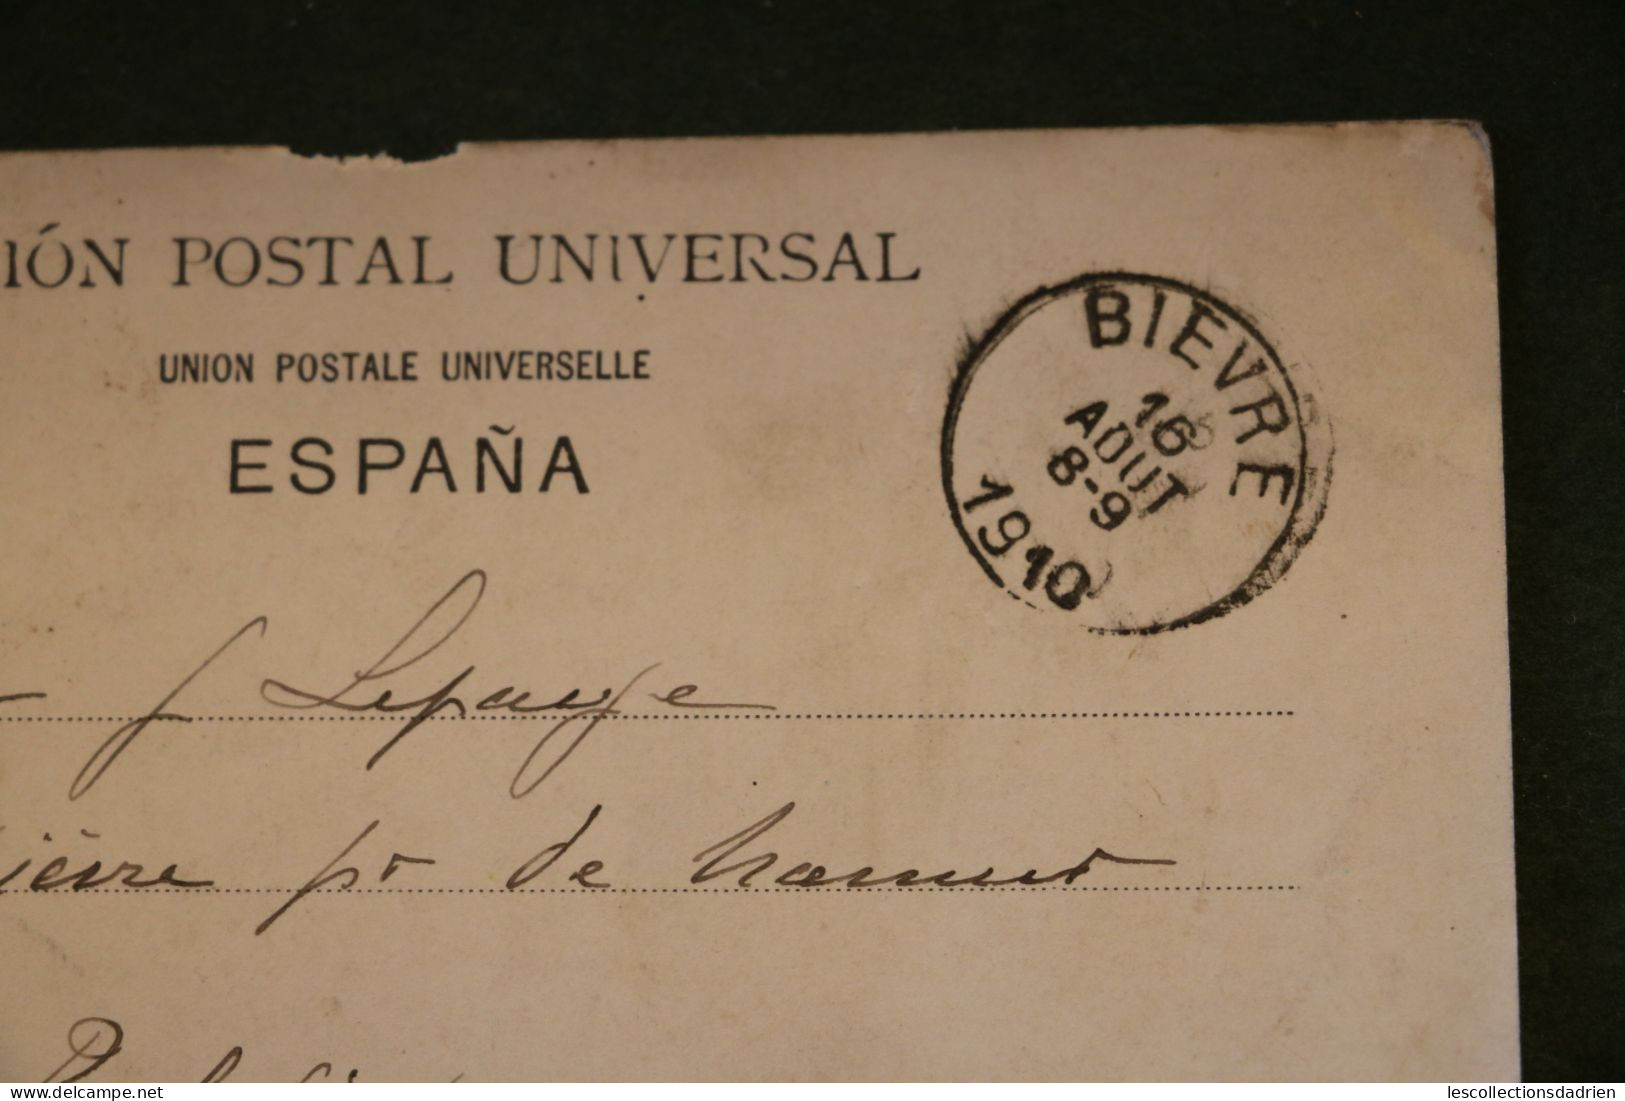 Carte postale Espagne - char à boeufs -  Fuenterrabia